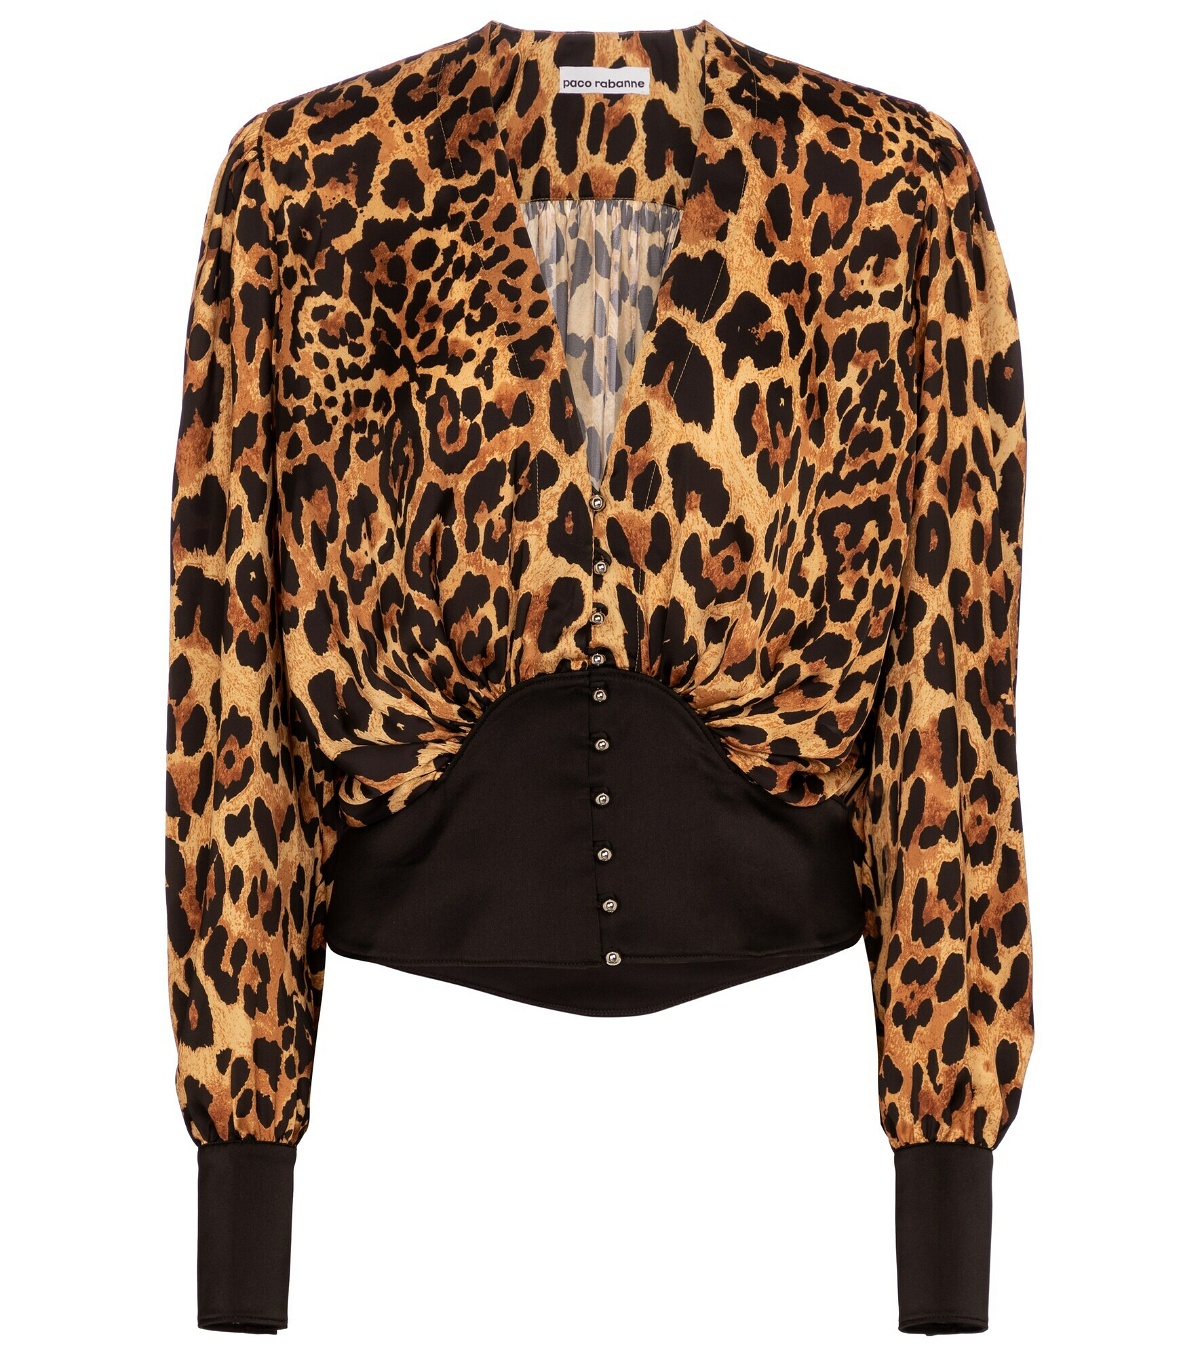 Paco Rabanne - Leopard-print satin blouse Paco Rabanne